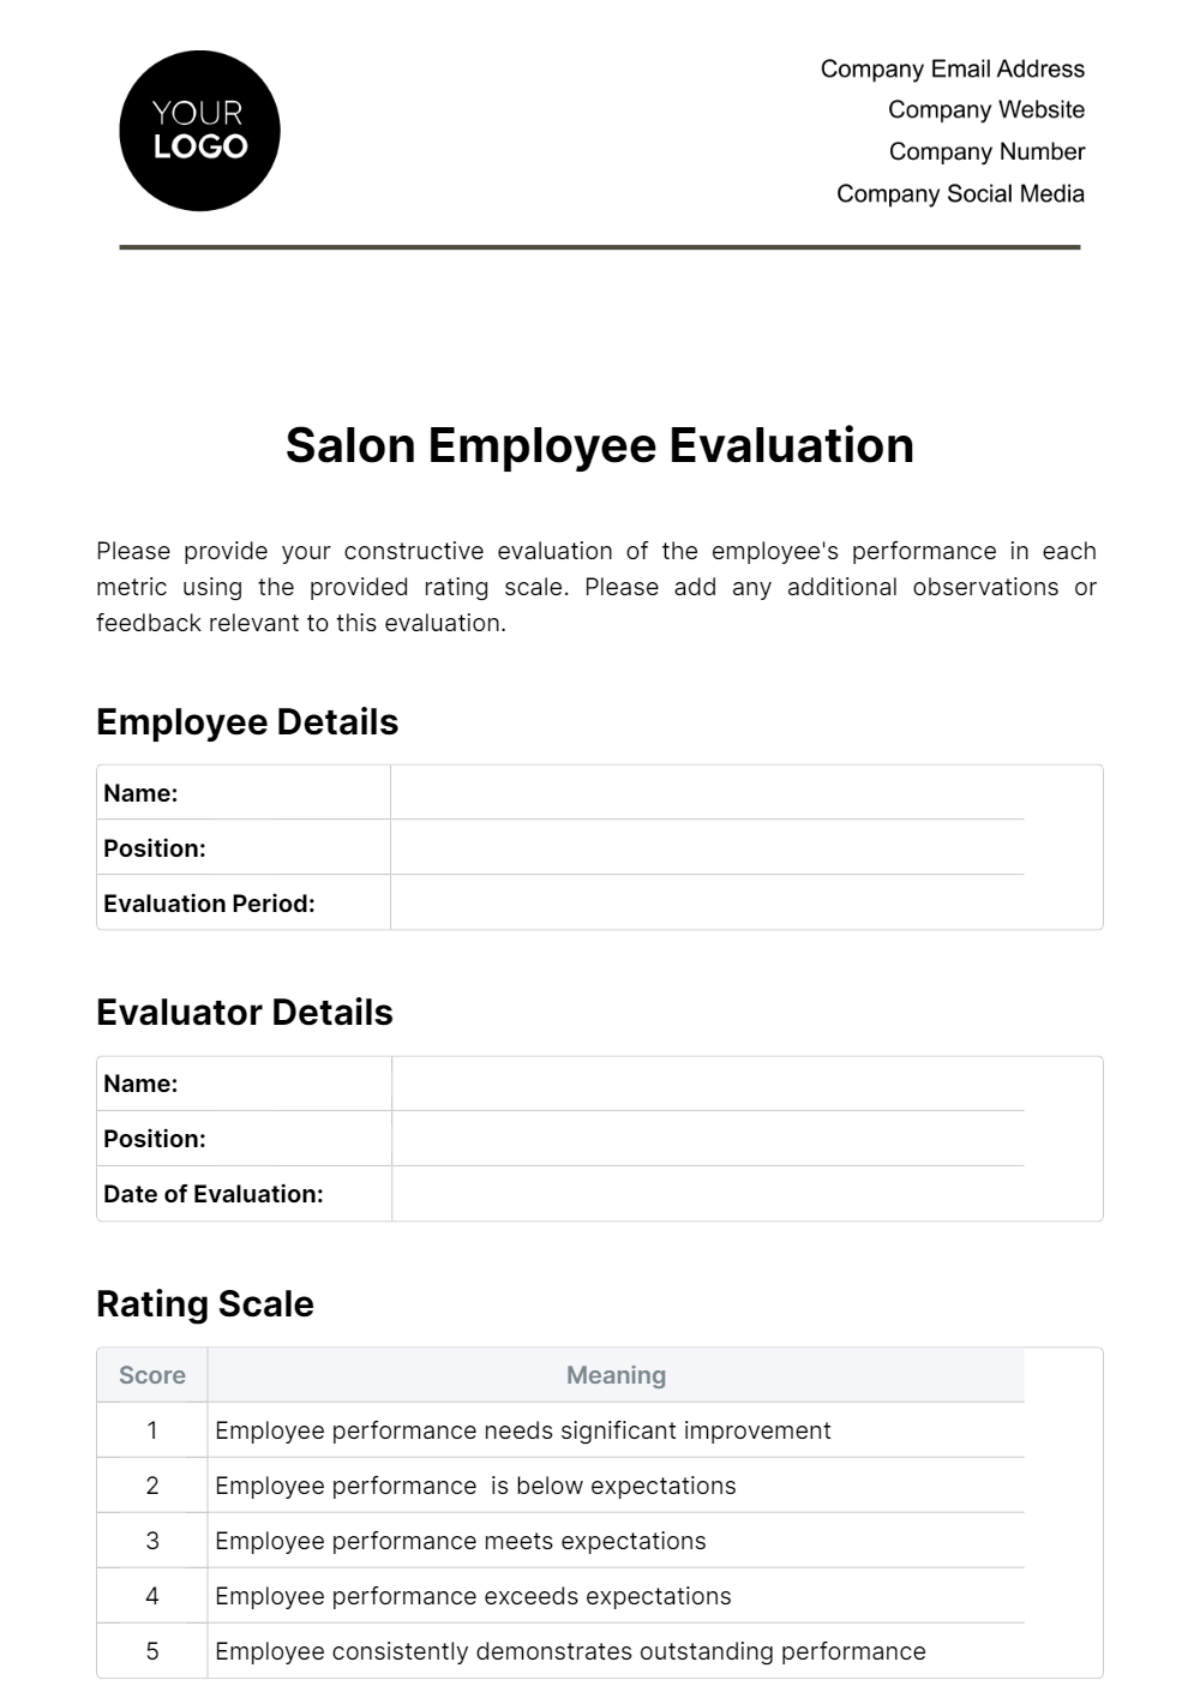 Salon Employee Evaluation Template